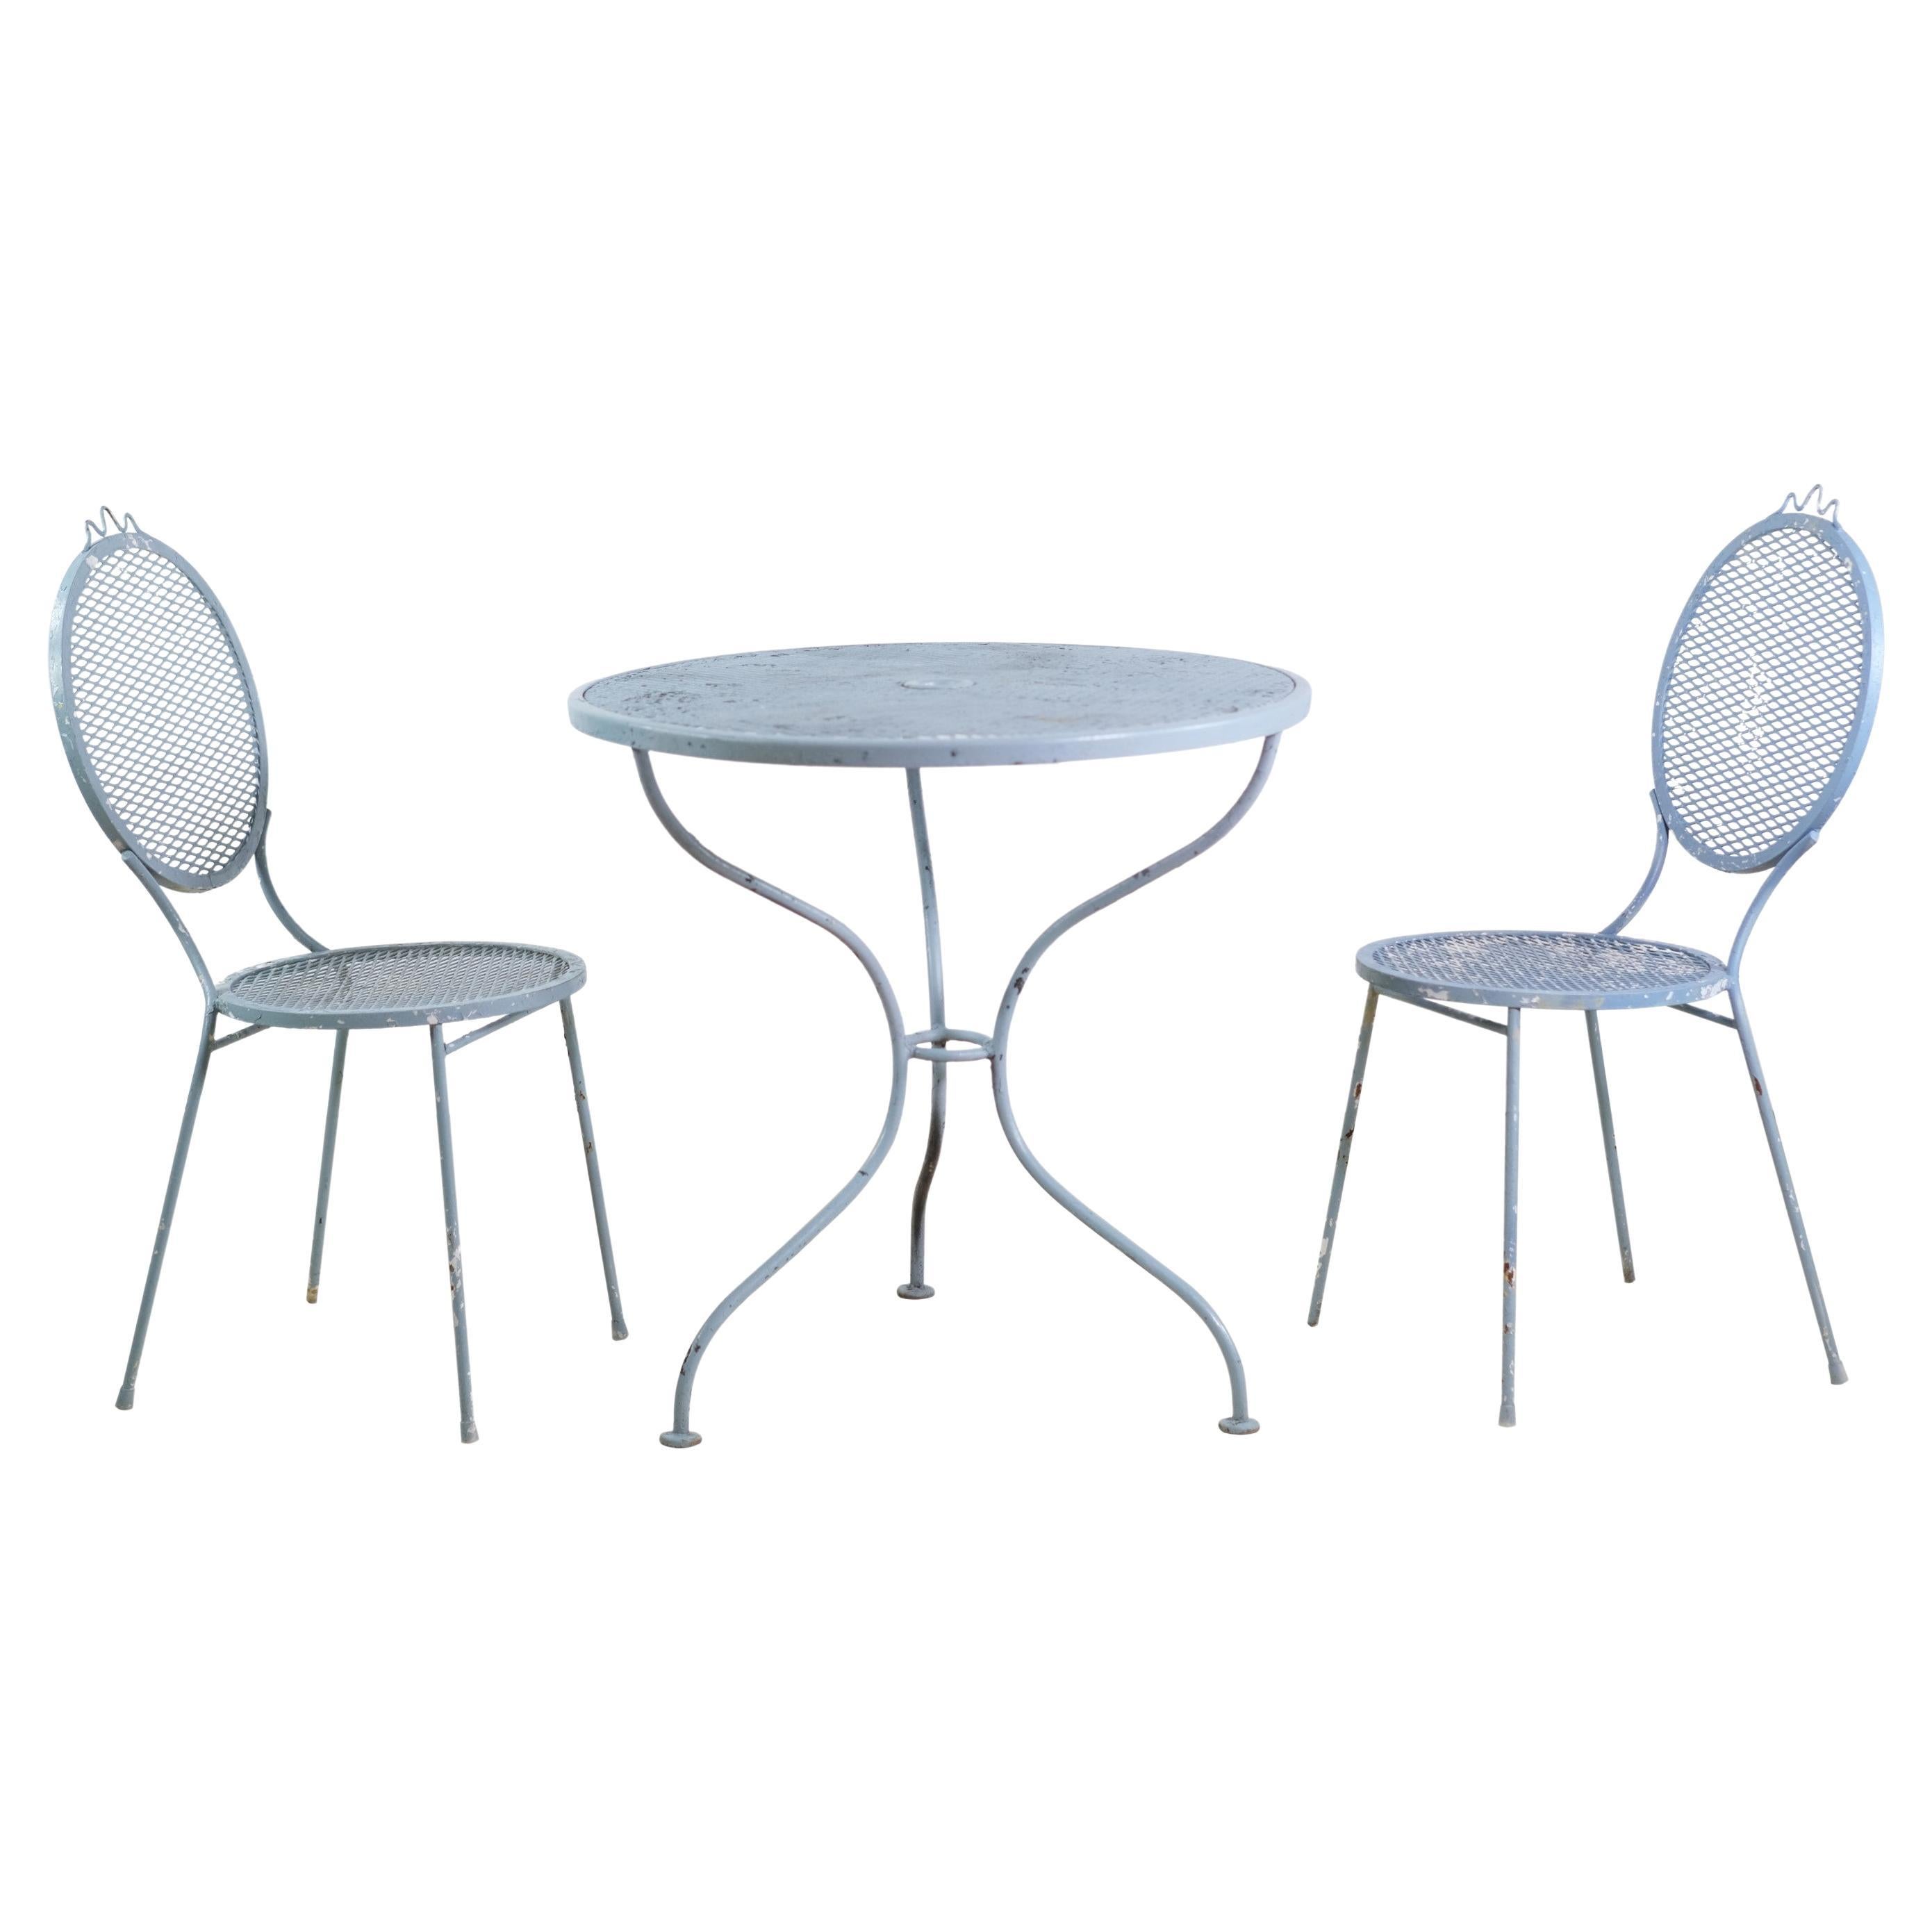 Vintage Metal 3 Pc. Bistro Patio Set - Table & 2 Chairs w/ Sky Blue Paint